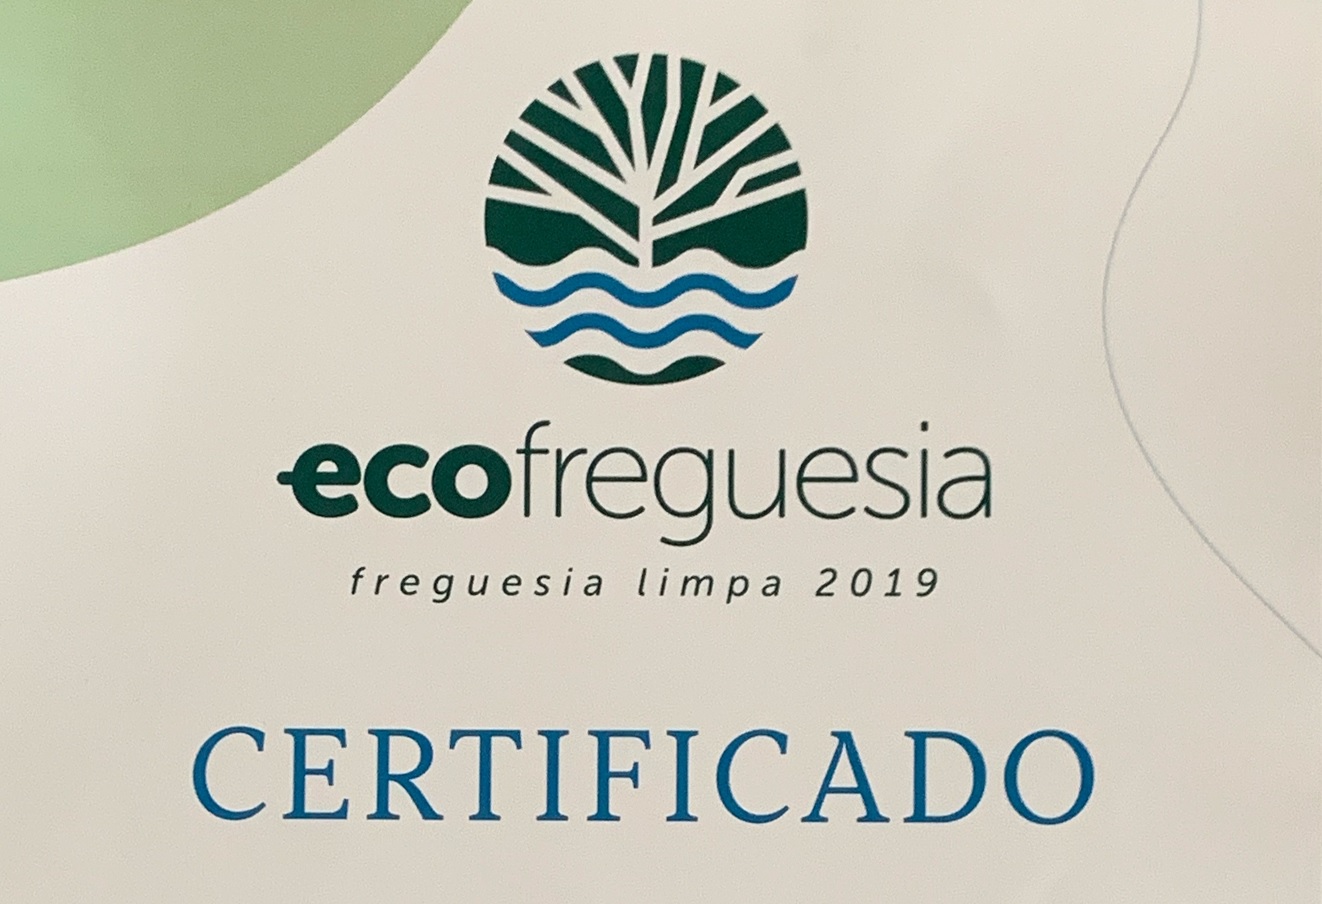 Certificado ecofreguesia - freguesia limpa 2019